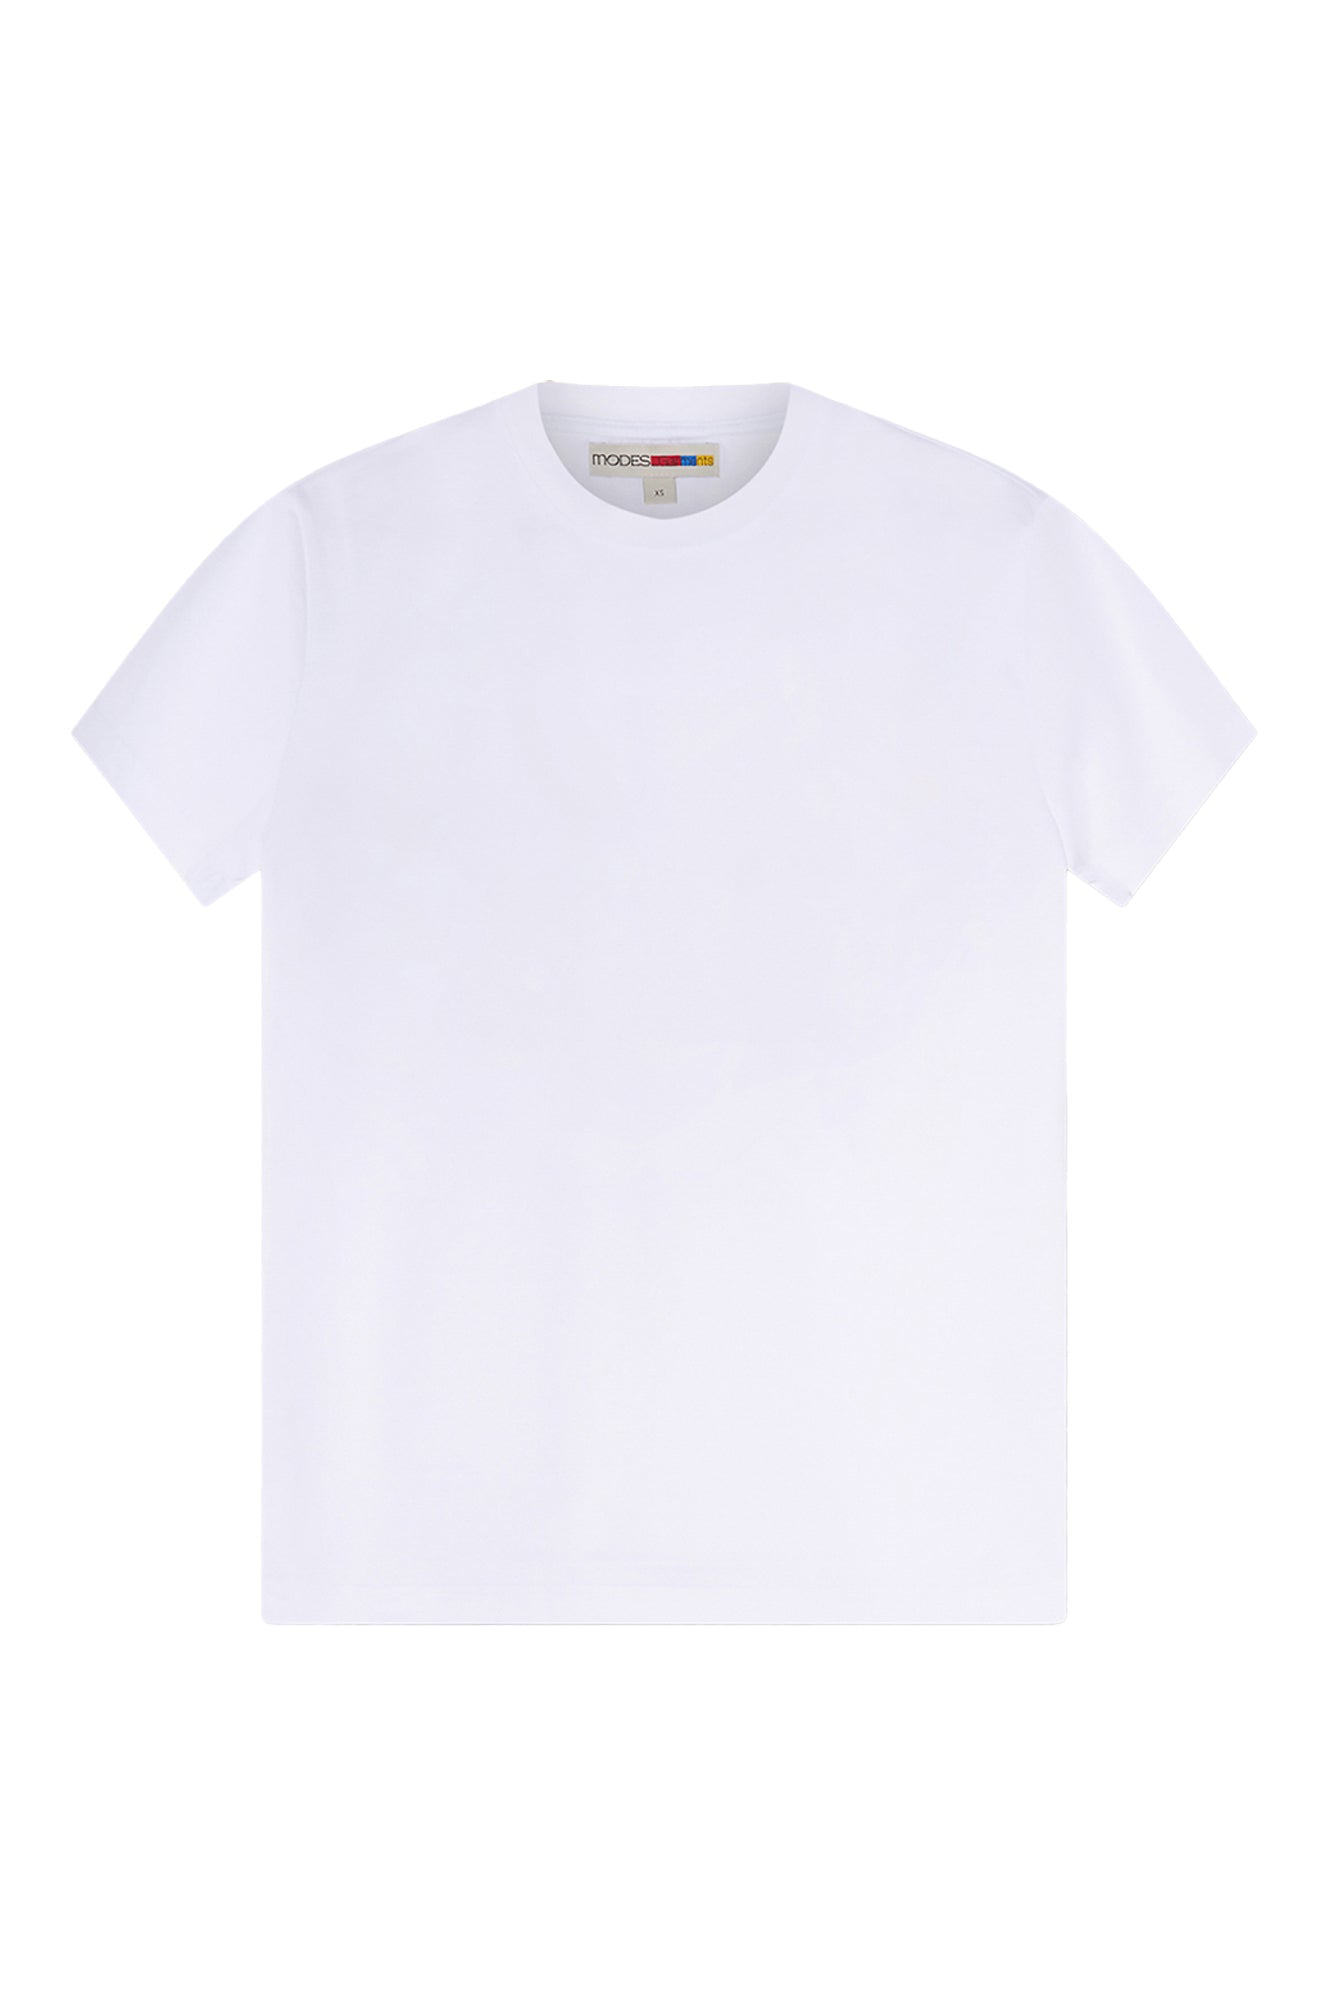 Unisex Plain White T-shirt